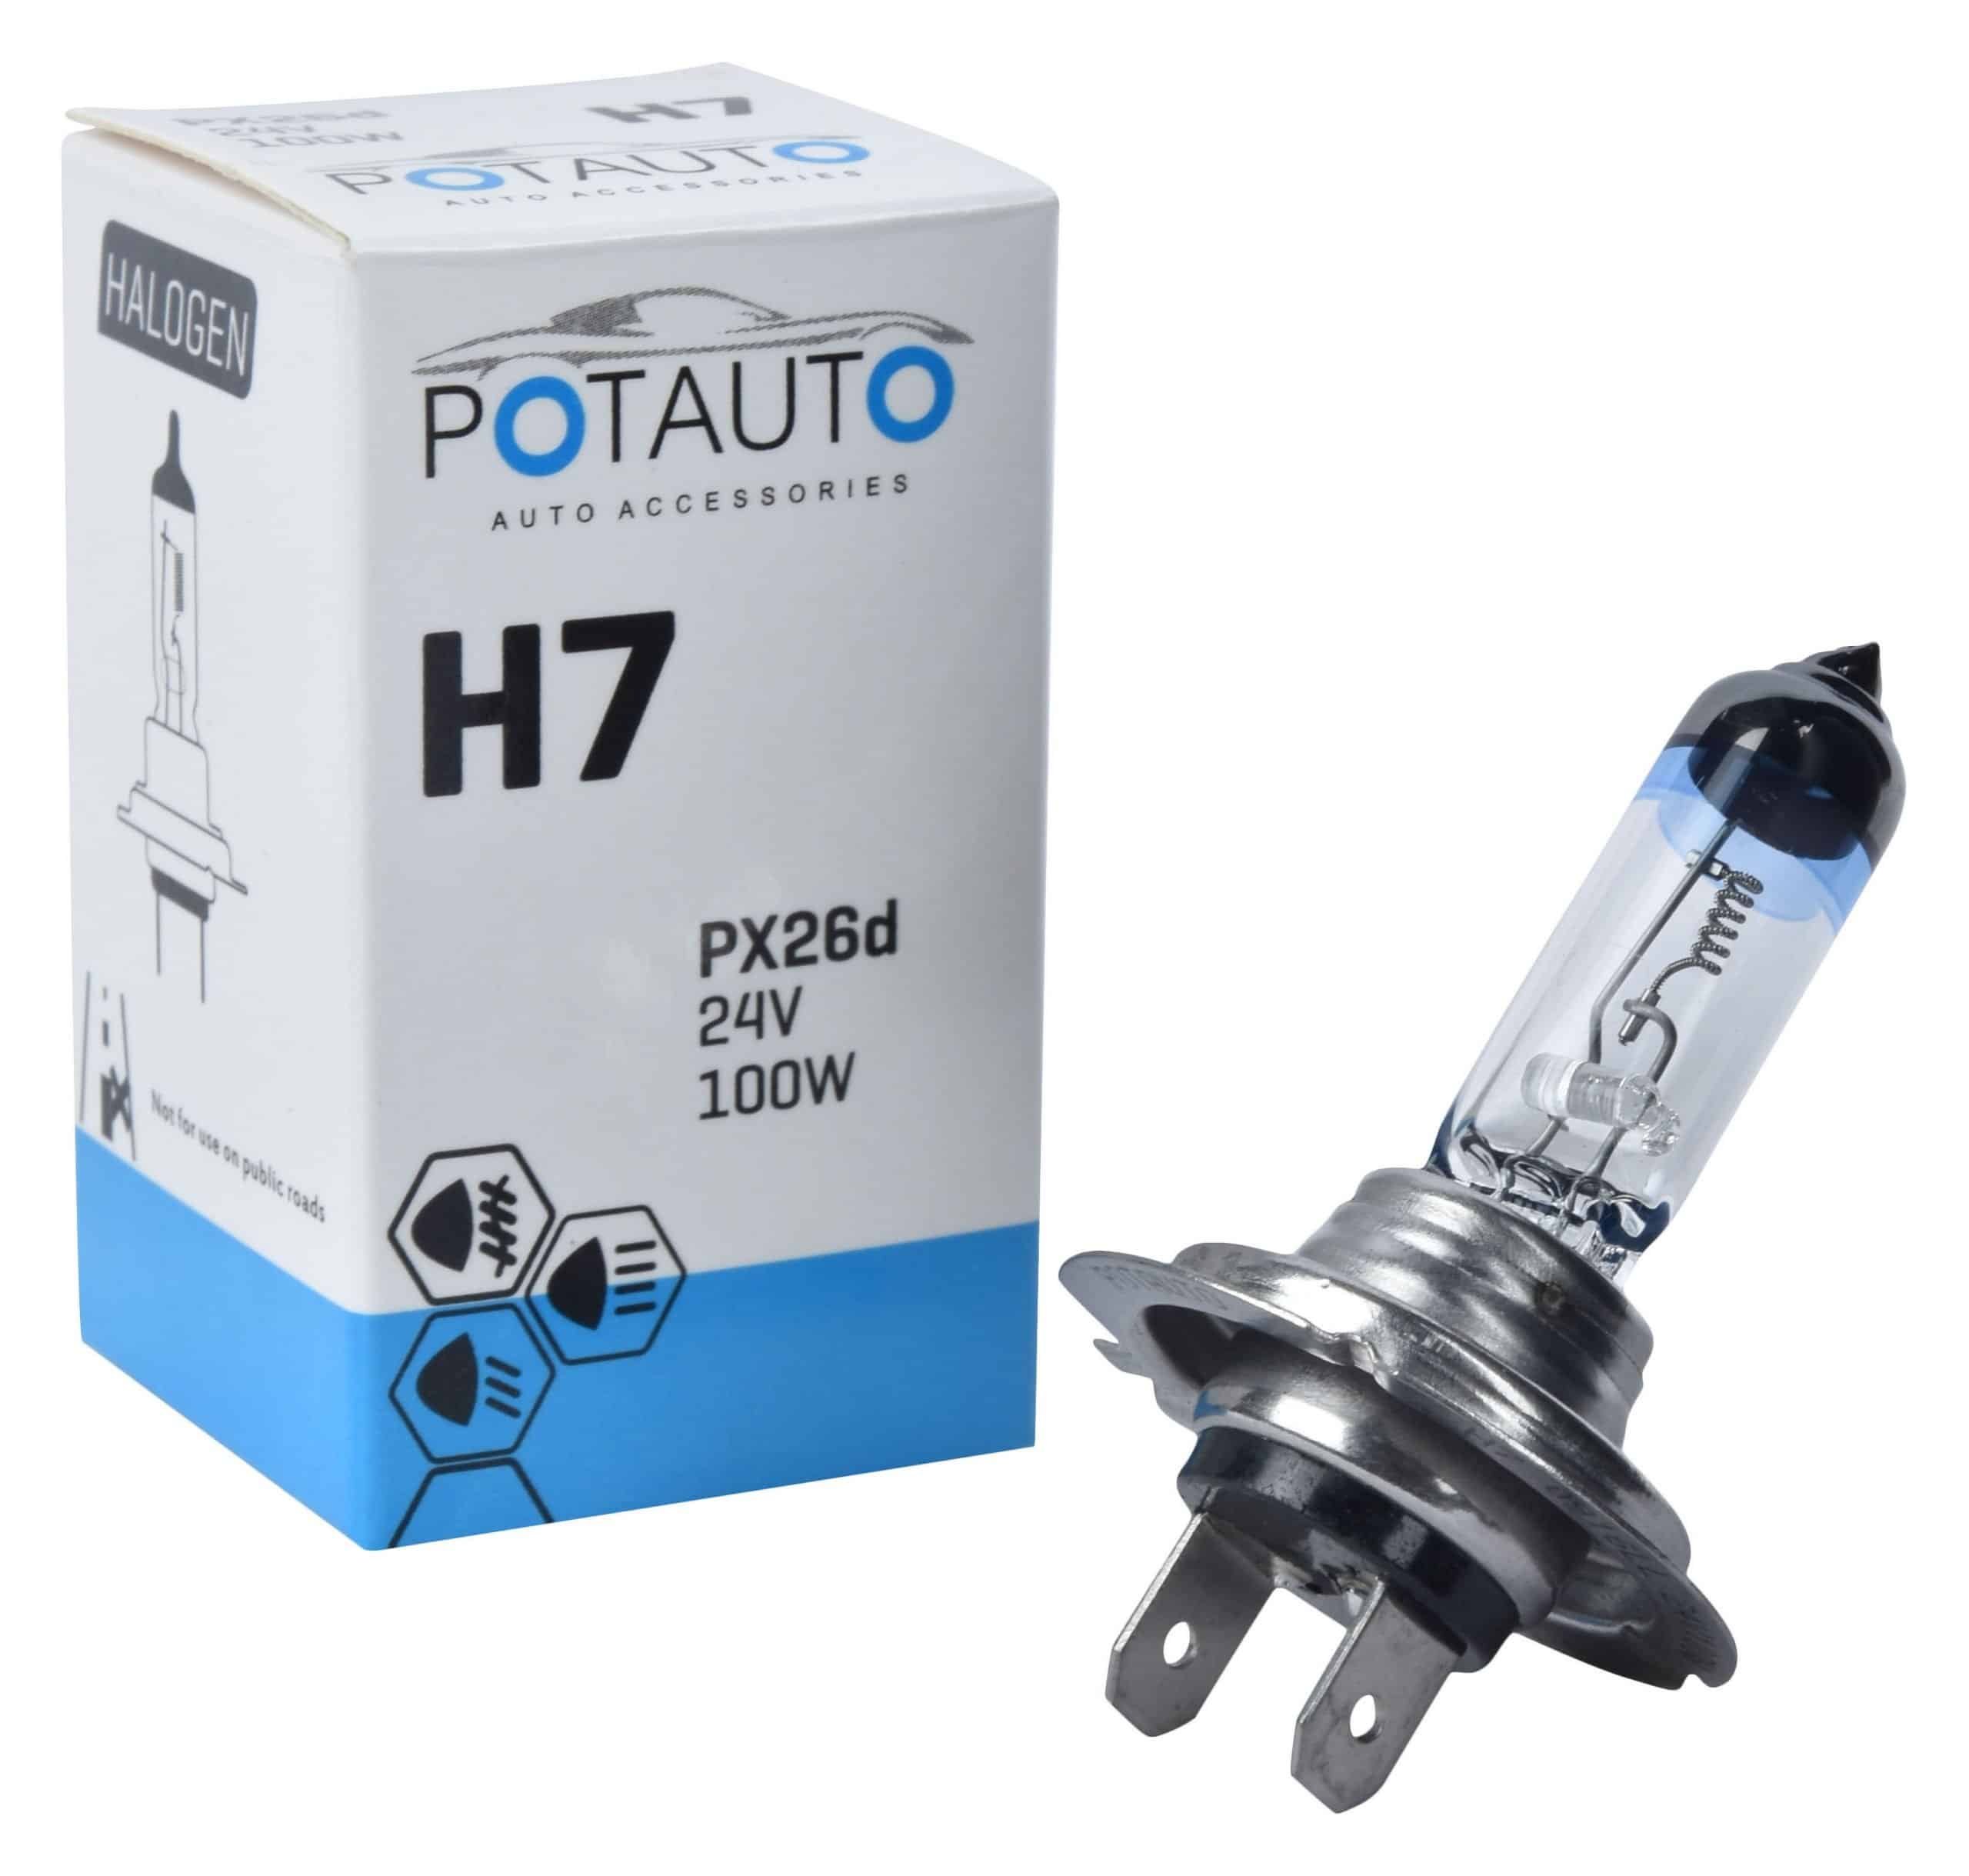 Potauto H7 Headlight Bulb PX26D 24V 100W Xtra Light